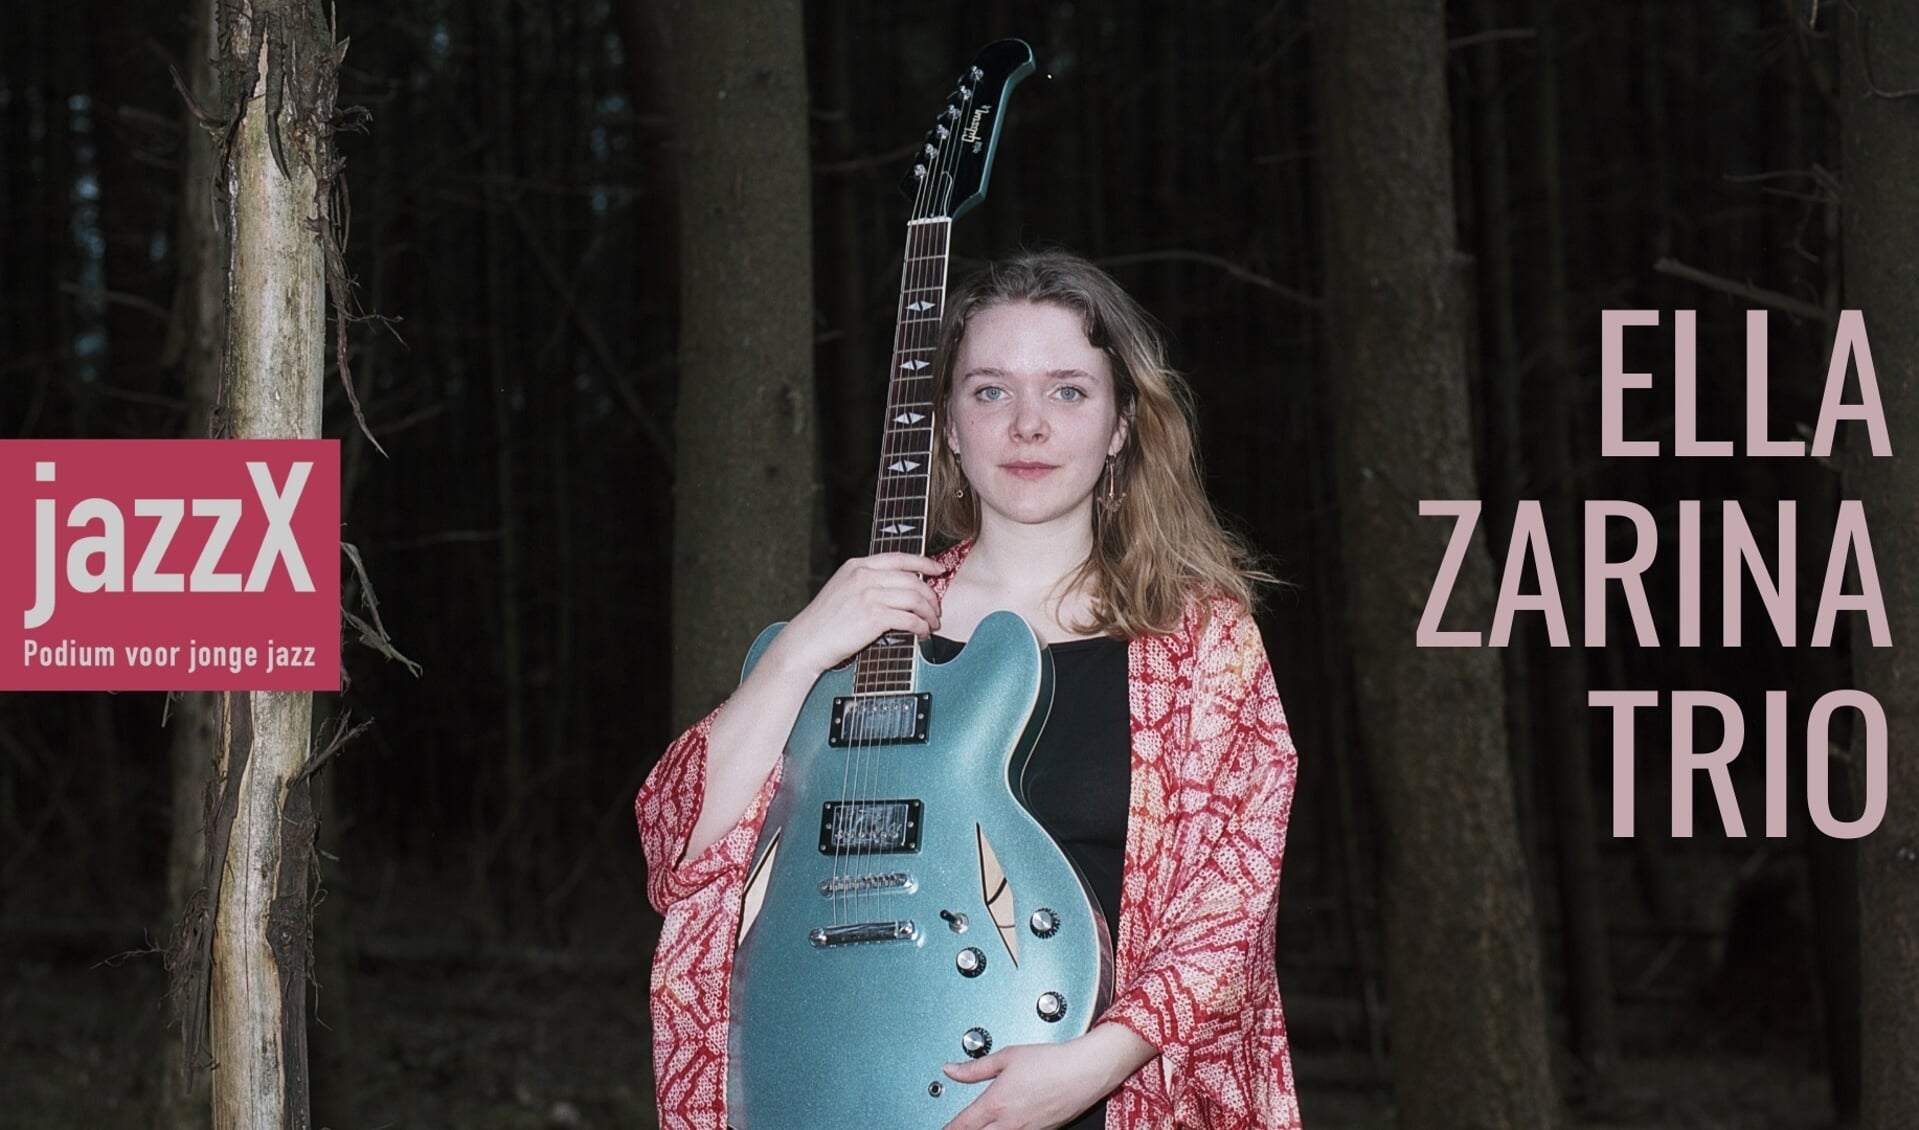 Ella Zarina Trio treedt op in de Pletterij.